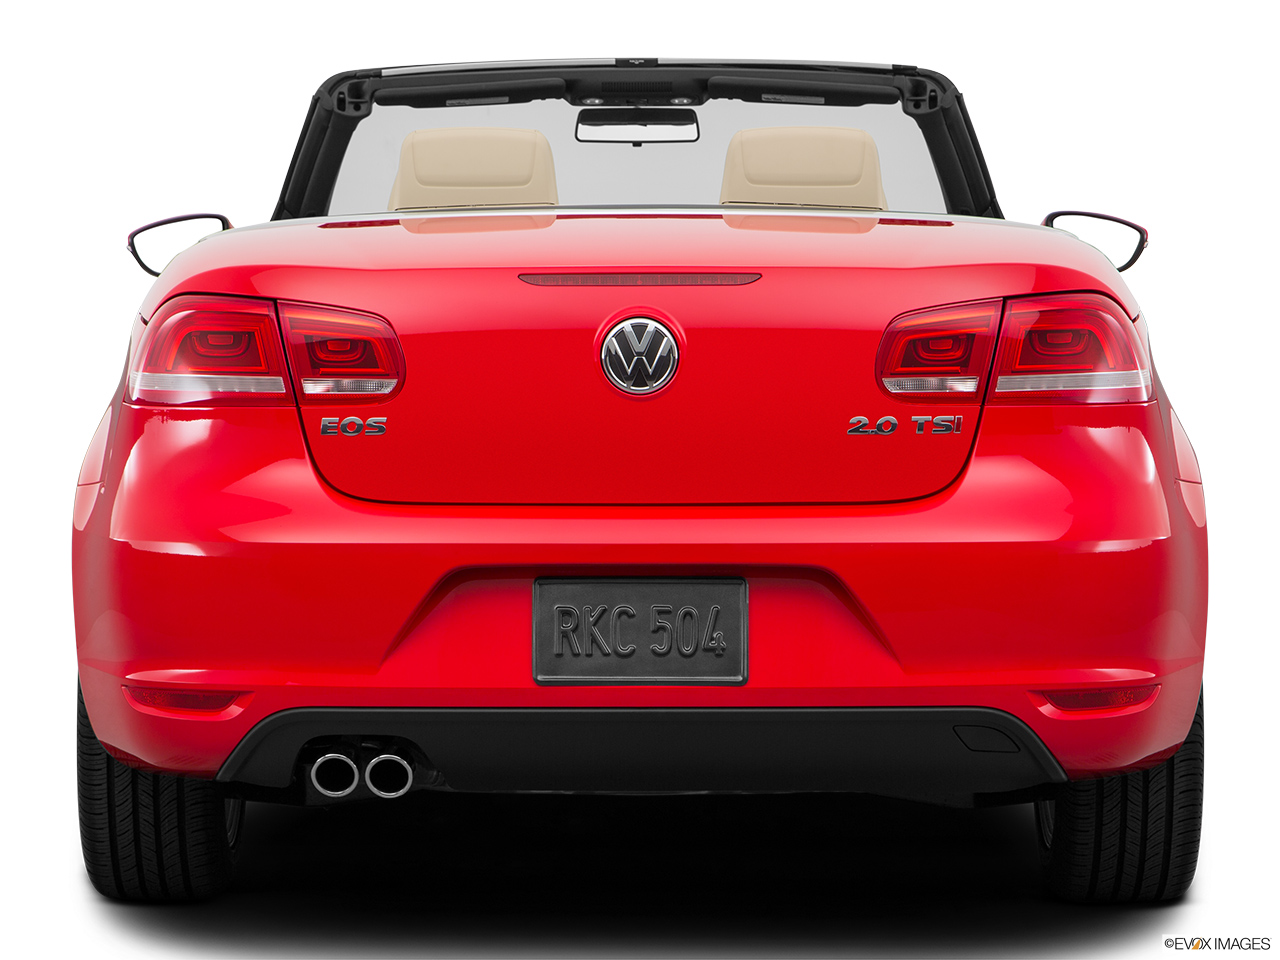 2016 Volkswagen Eos Komfort Edition Low/wide rear. 